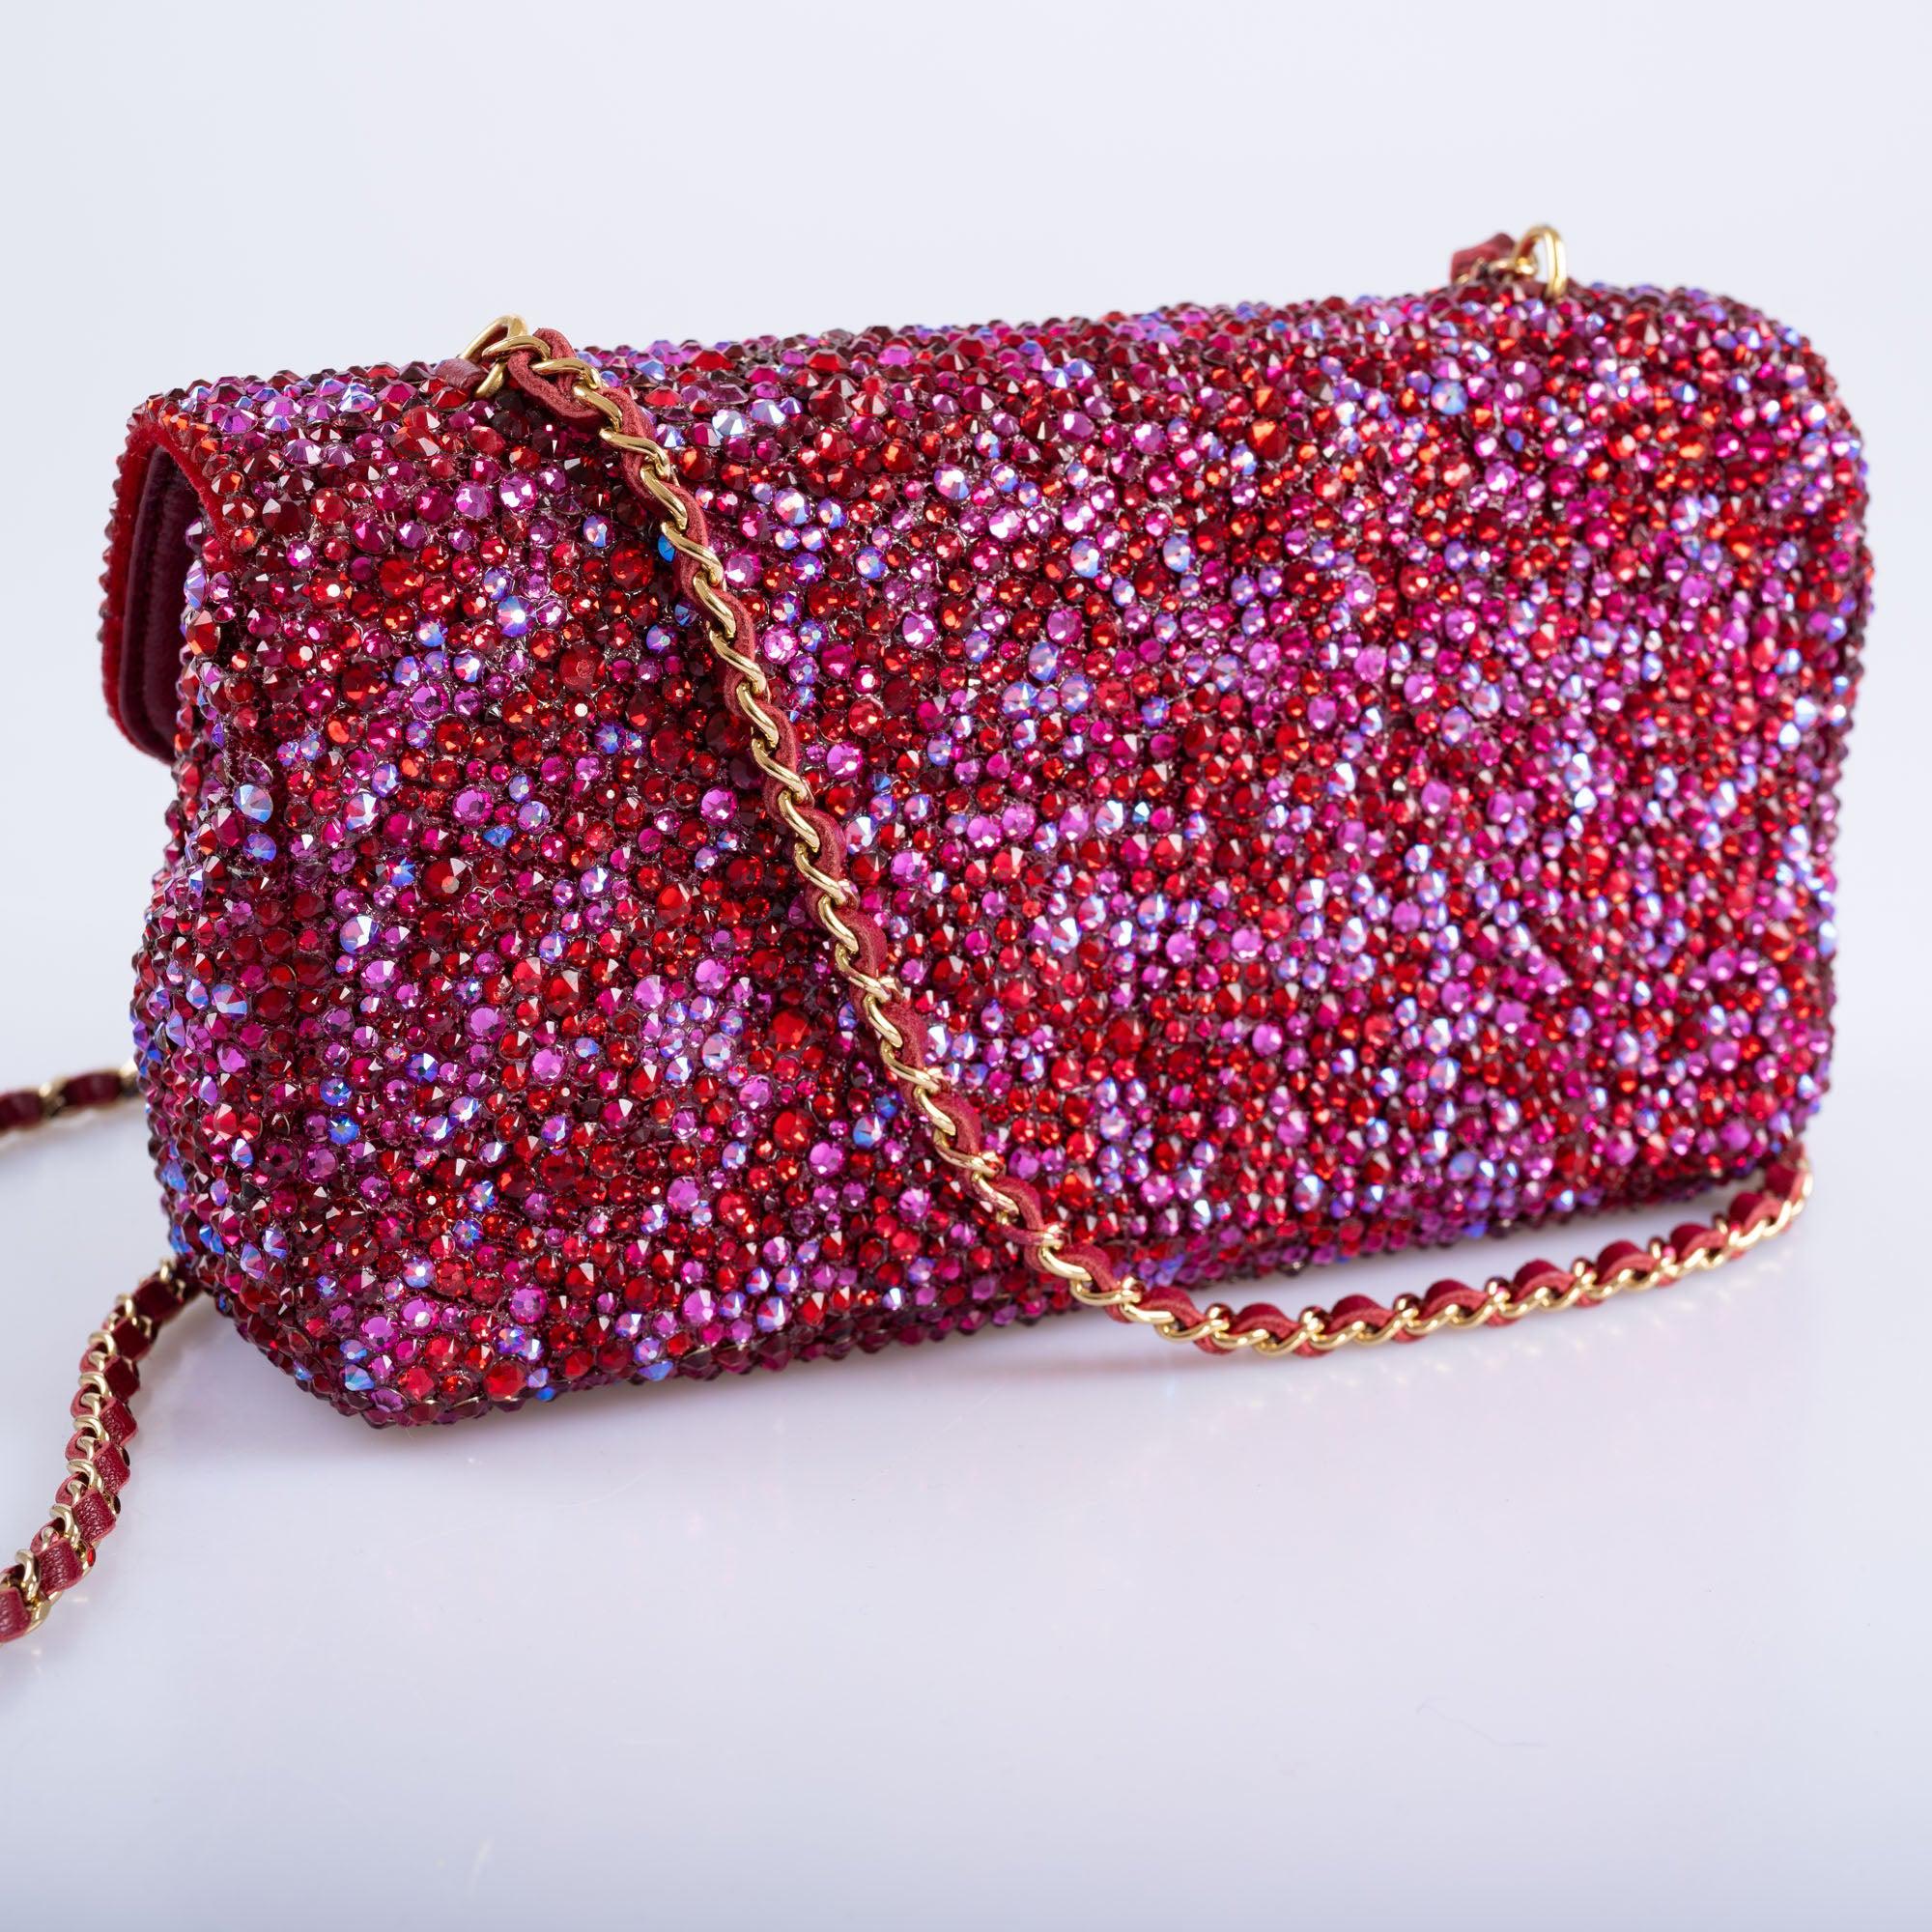 Vintage Chanel Camellia Flap Bag: A Dazzling Masterpiece with Custom Swarovski Crystals